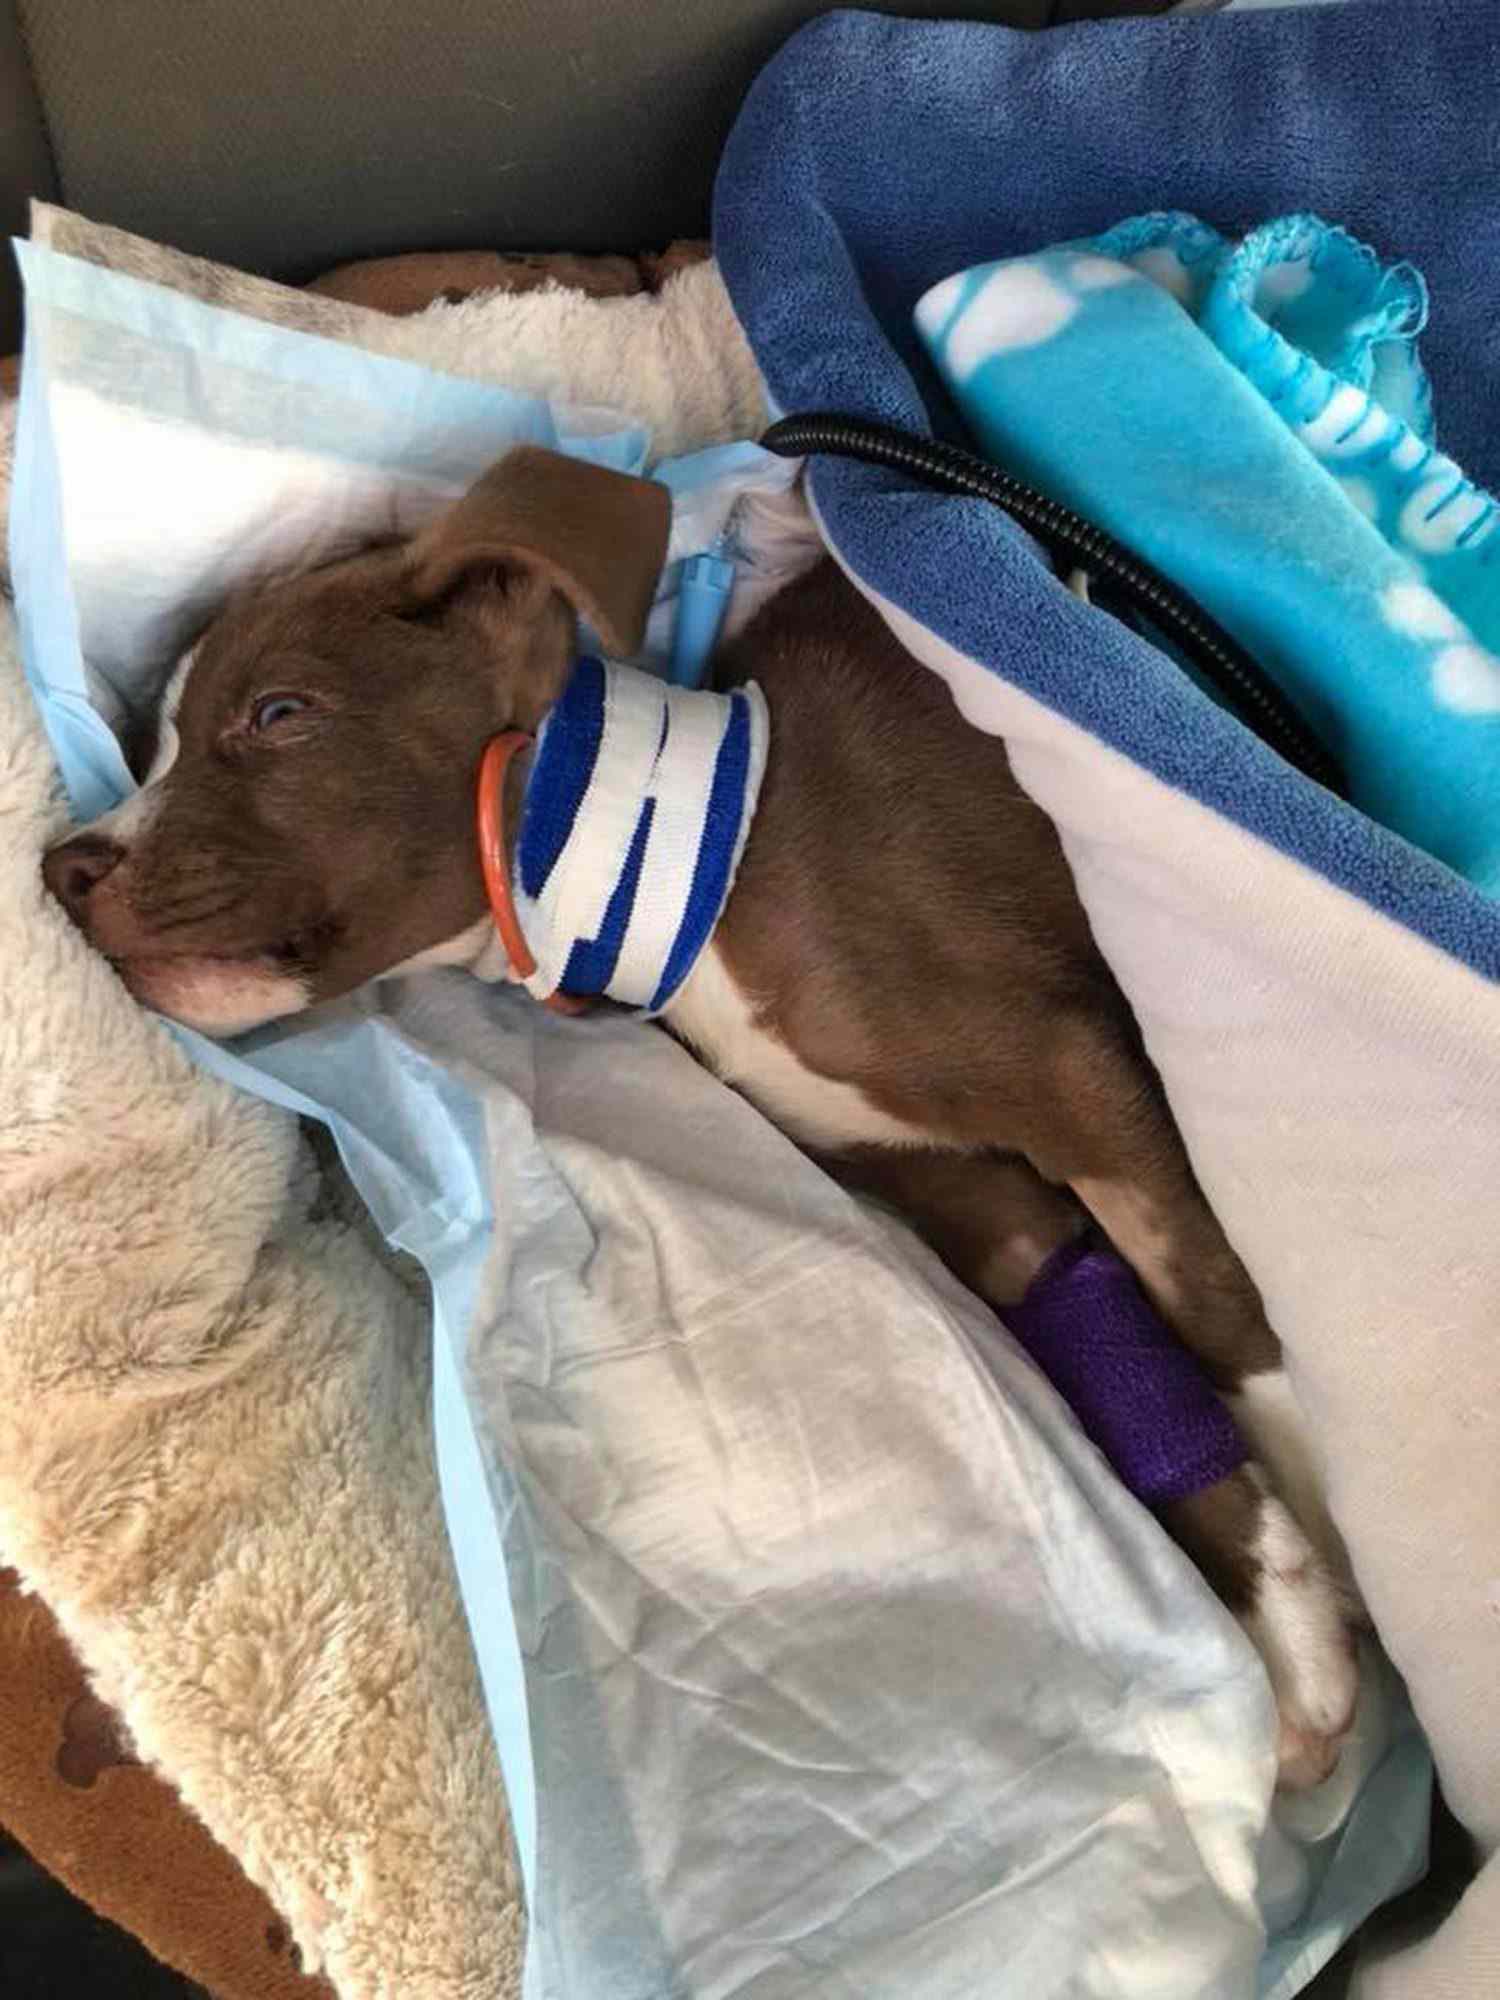 puppy found injuredCredit: Courtesy Erica McCarthy